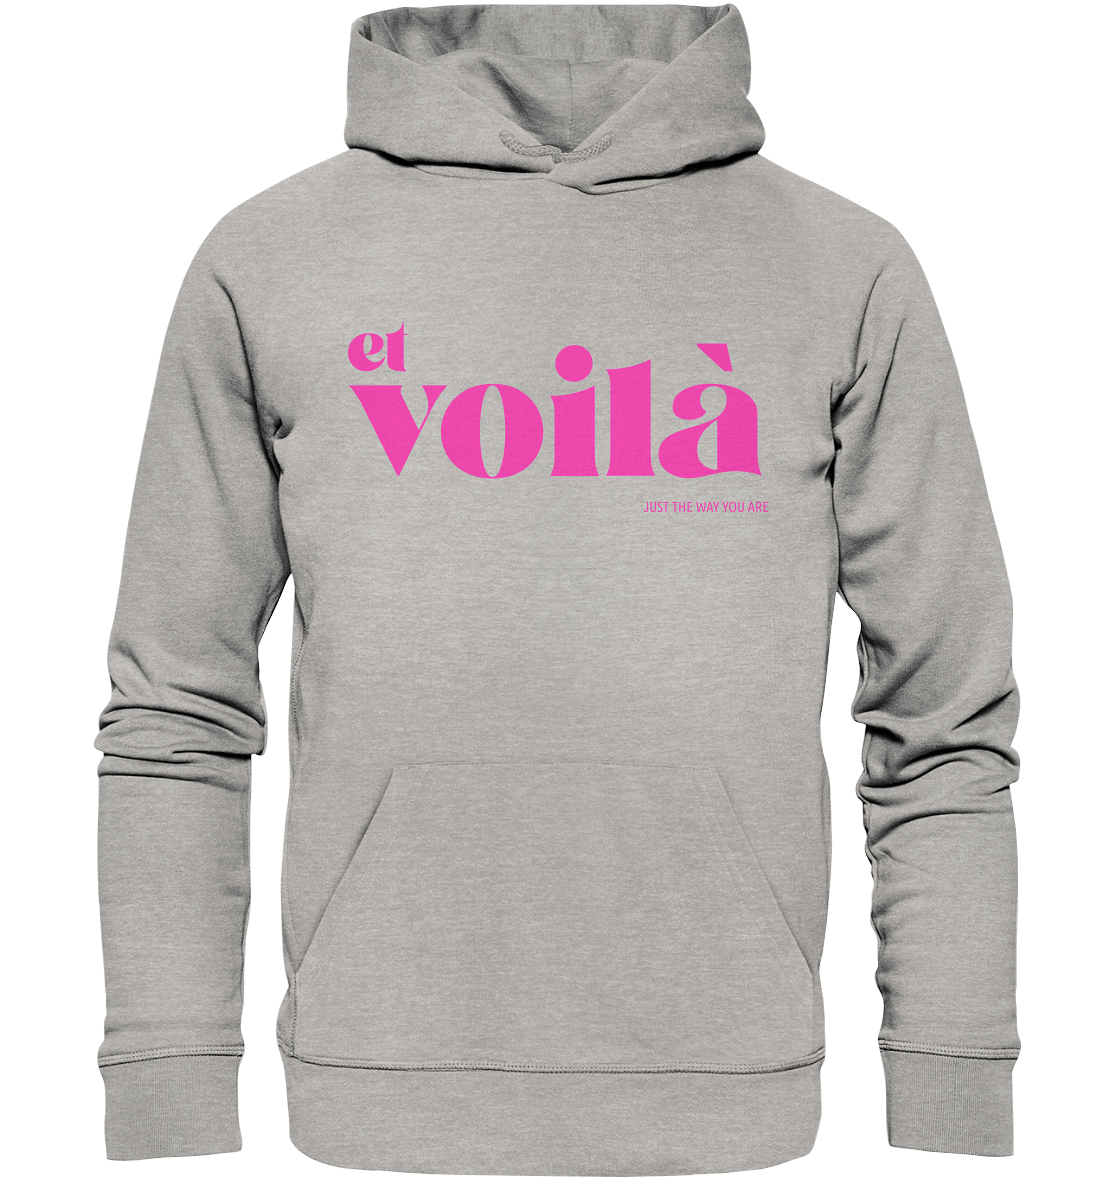 Et voilà Design. Trendiges Hoodie mit coolen Statement, Et voilà - Just the way you are hoodie grau lettering in pink